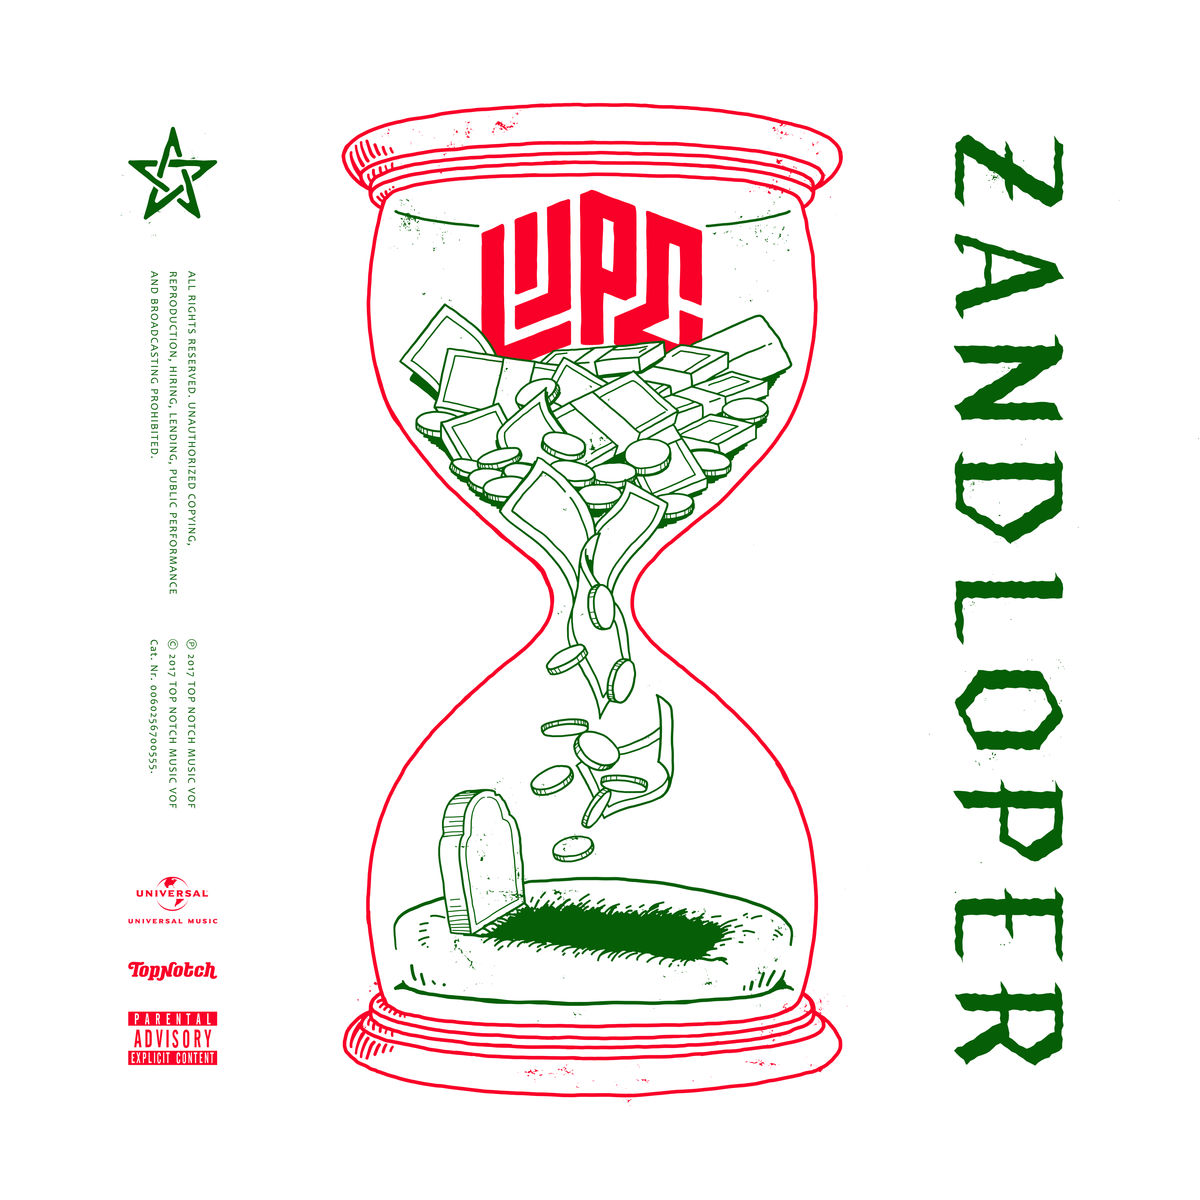 Lijpe - Zandloper (album artwork cover)